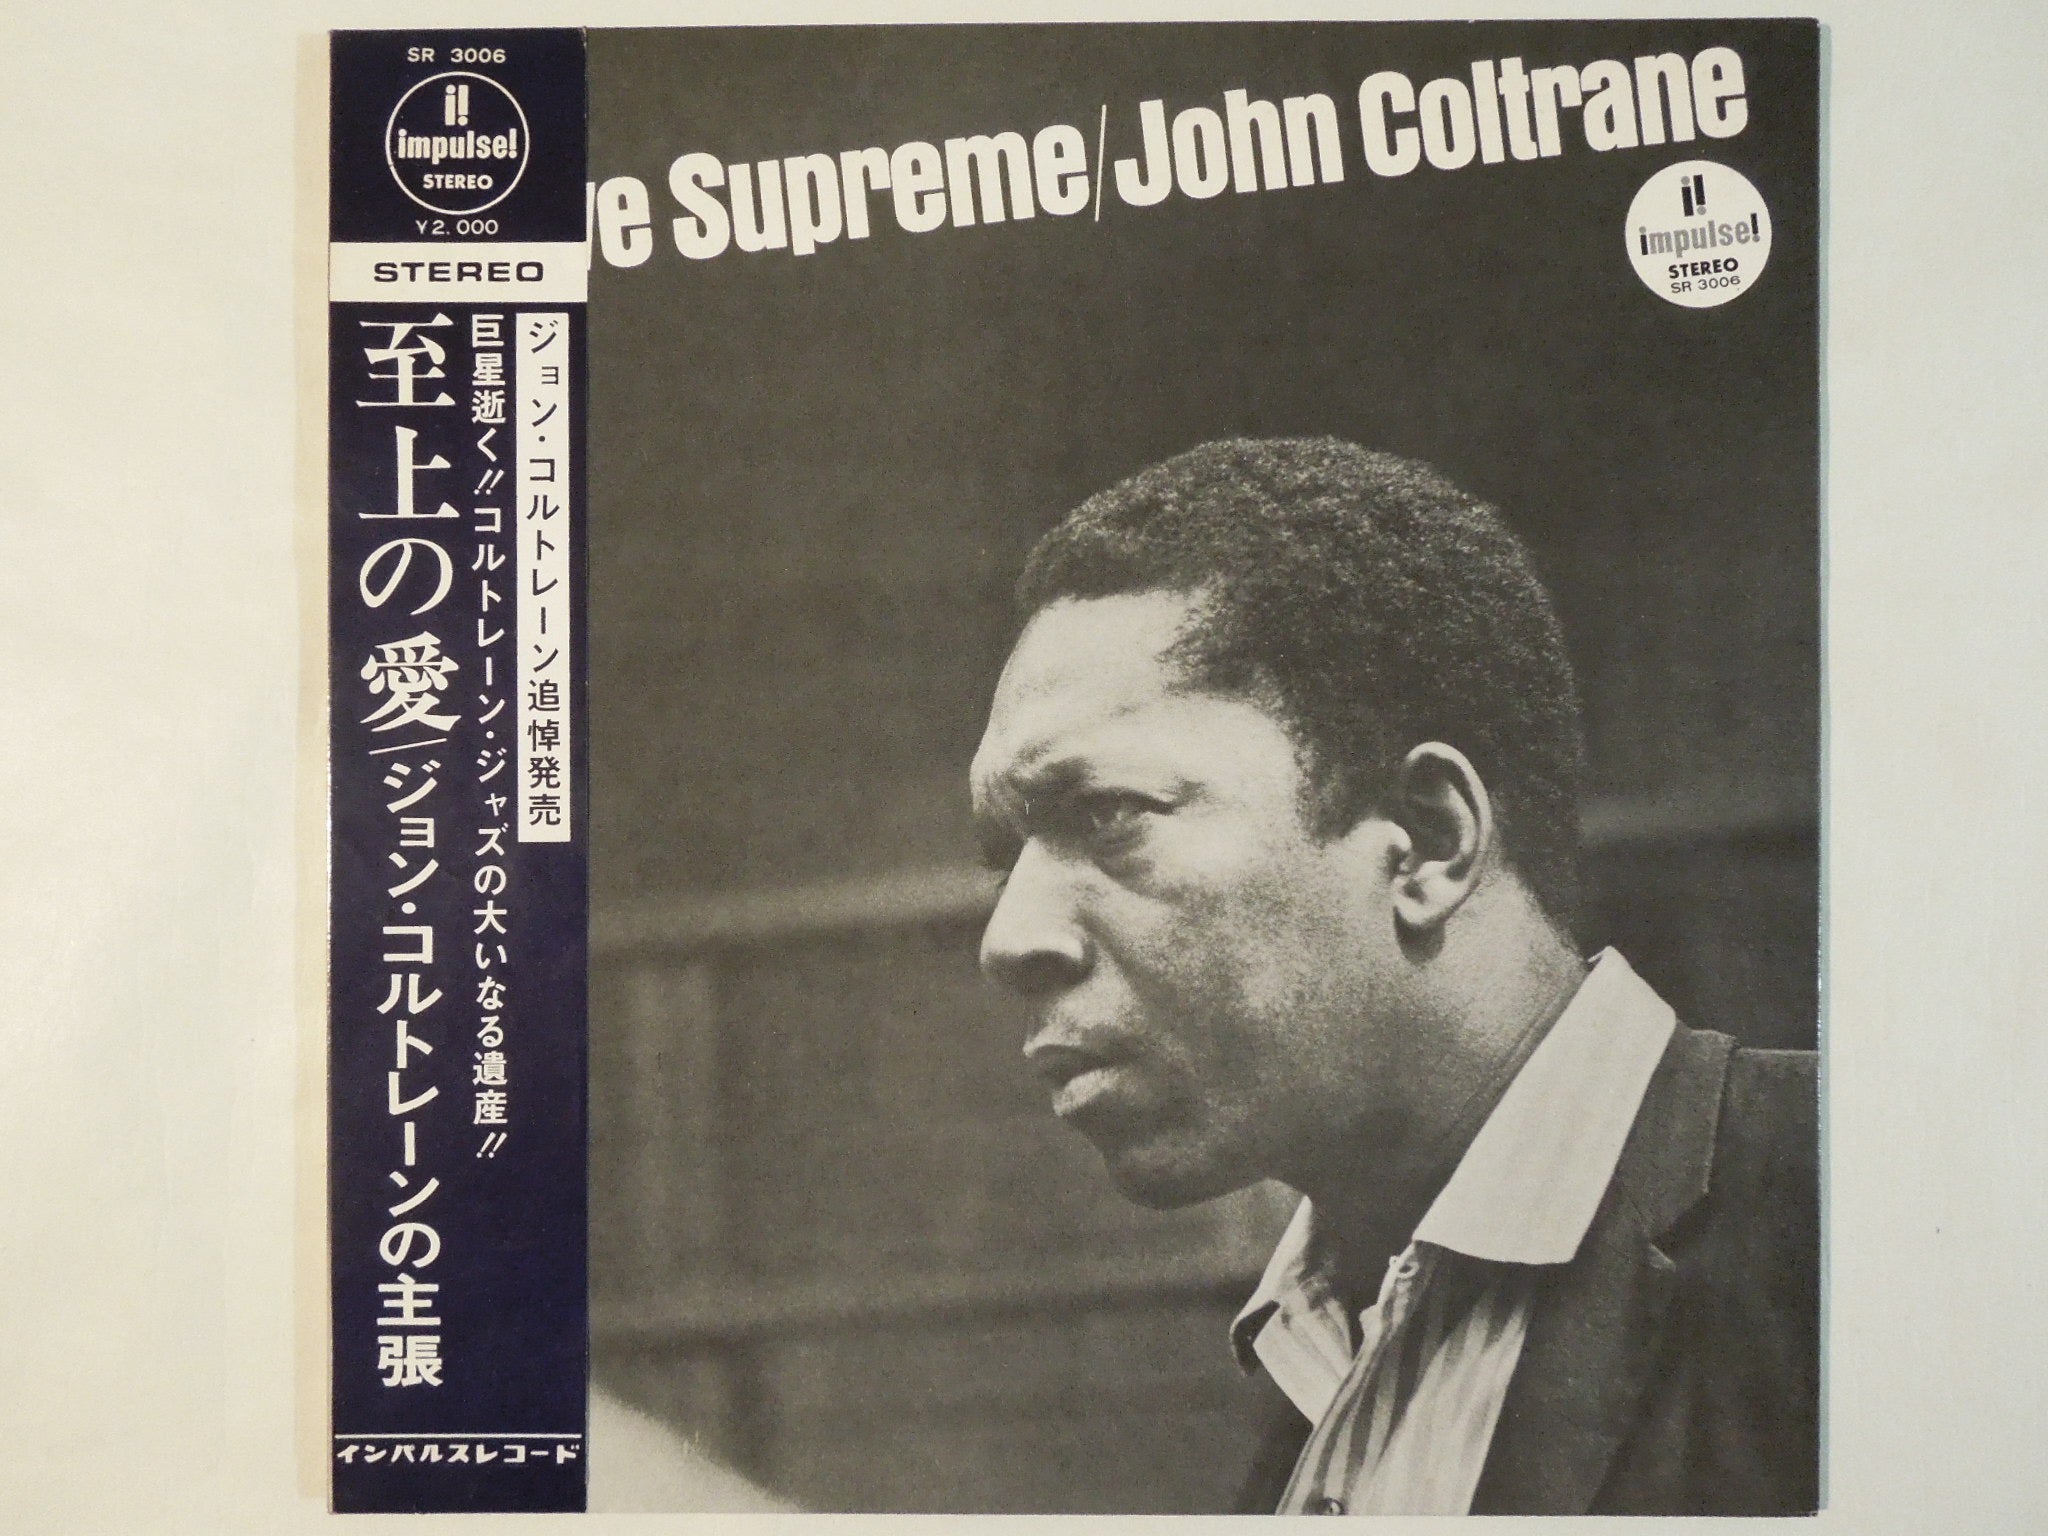 John Coltrane – Ballads ジャズレコード 安価 sandorobotics.com